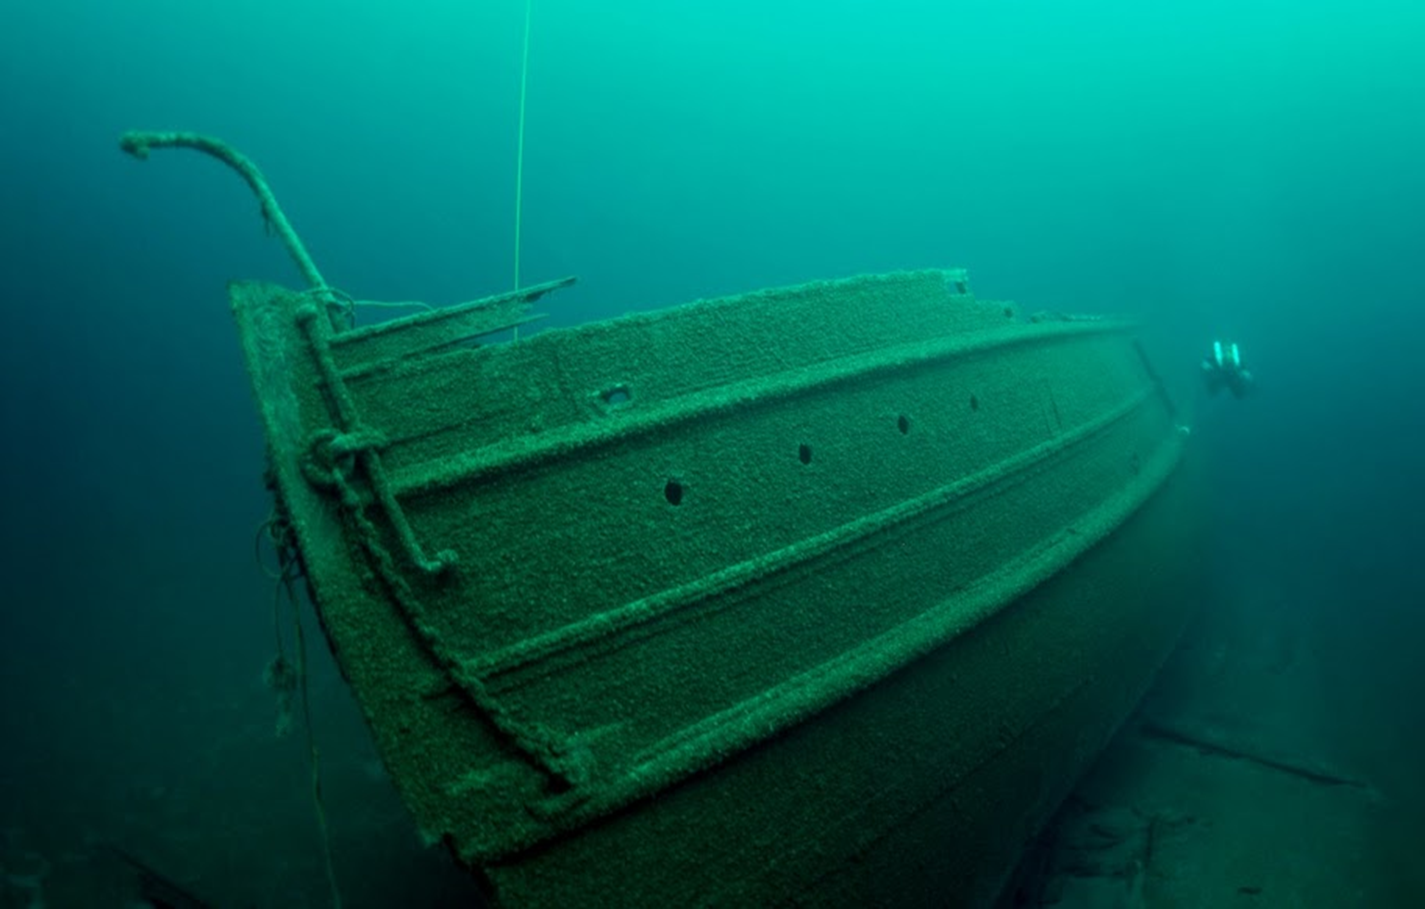 Lake Michigan's water has kept the steamer Vernon intact